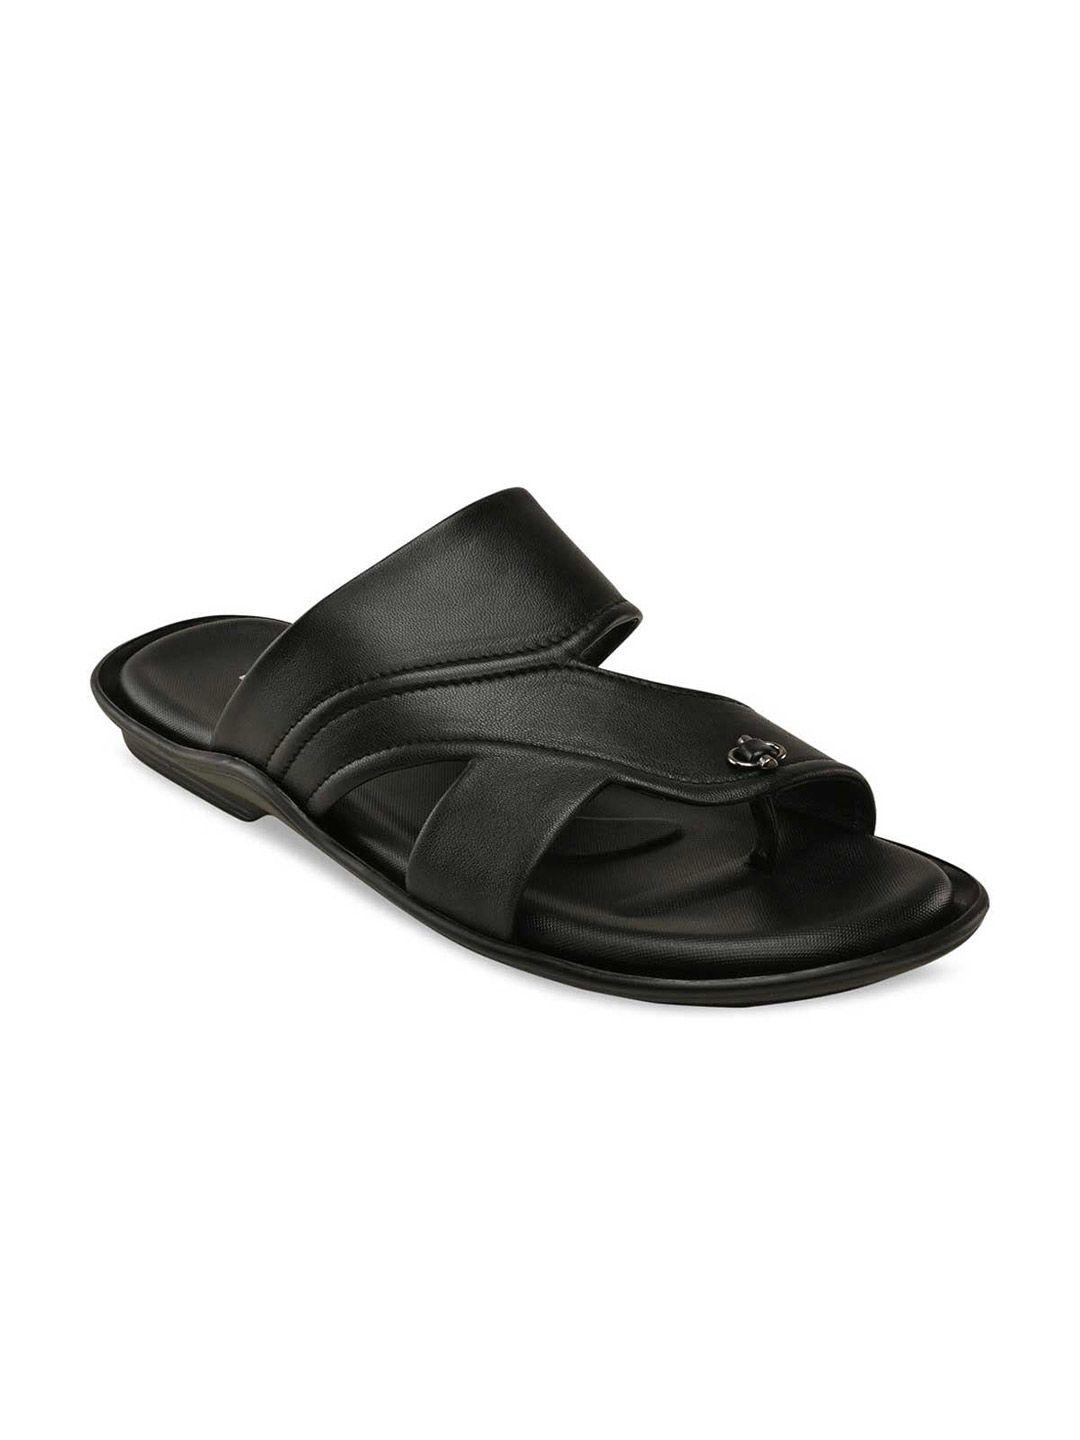 regal-men-black-leather-comfort-sandals